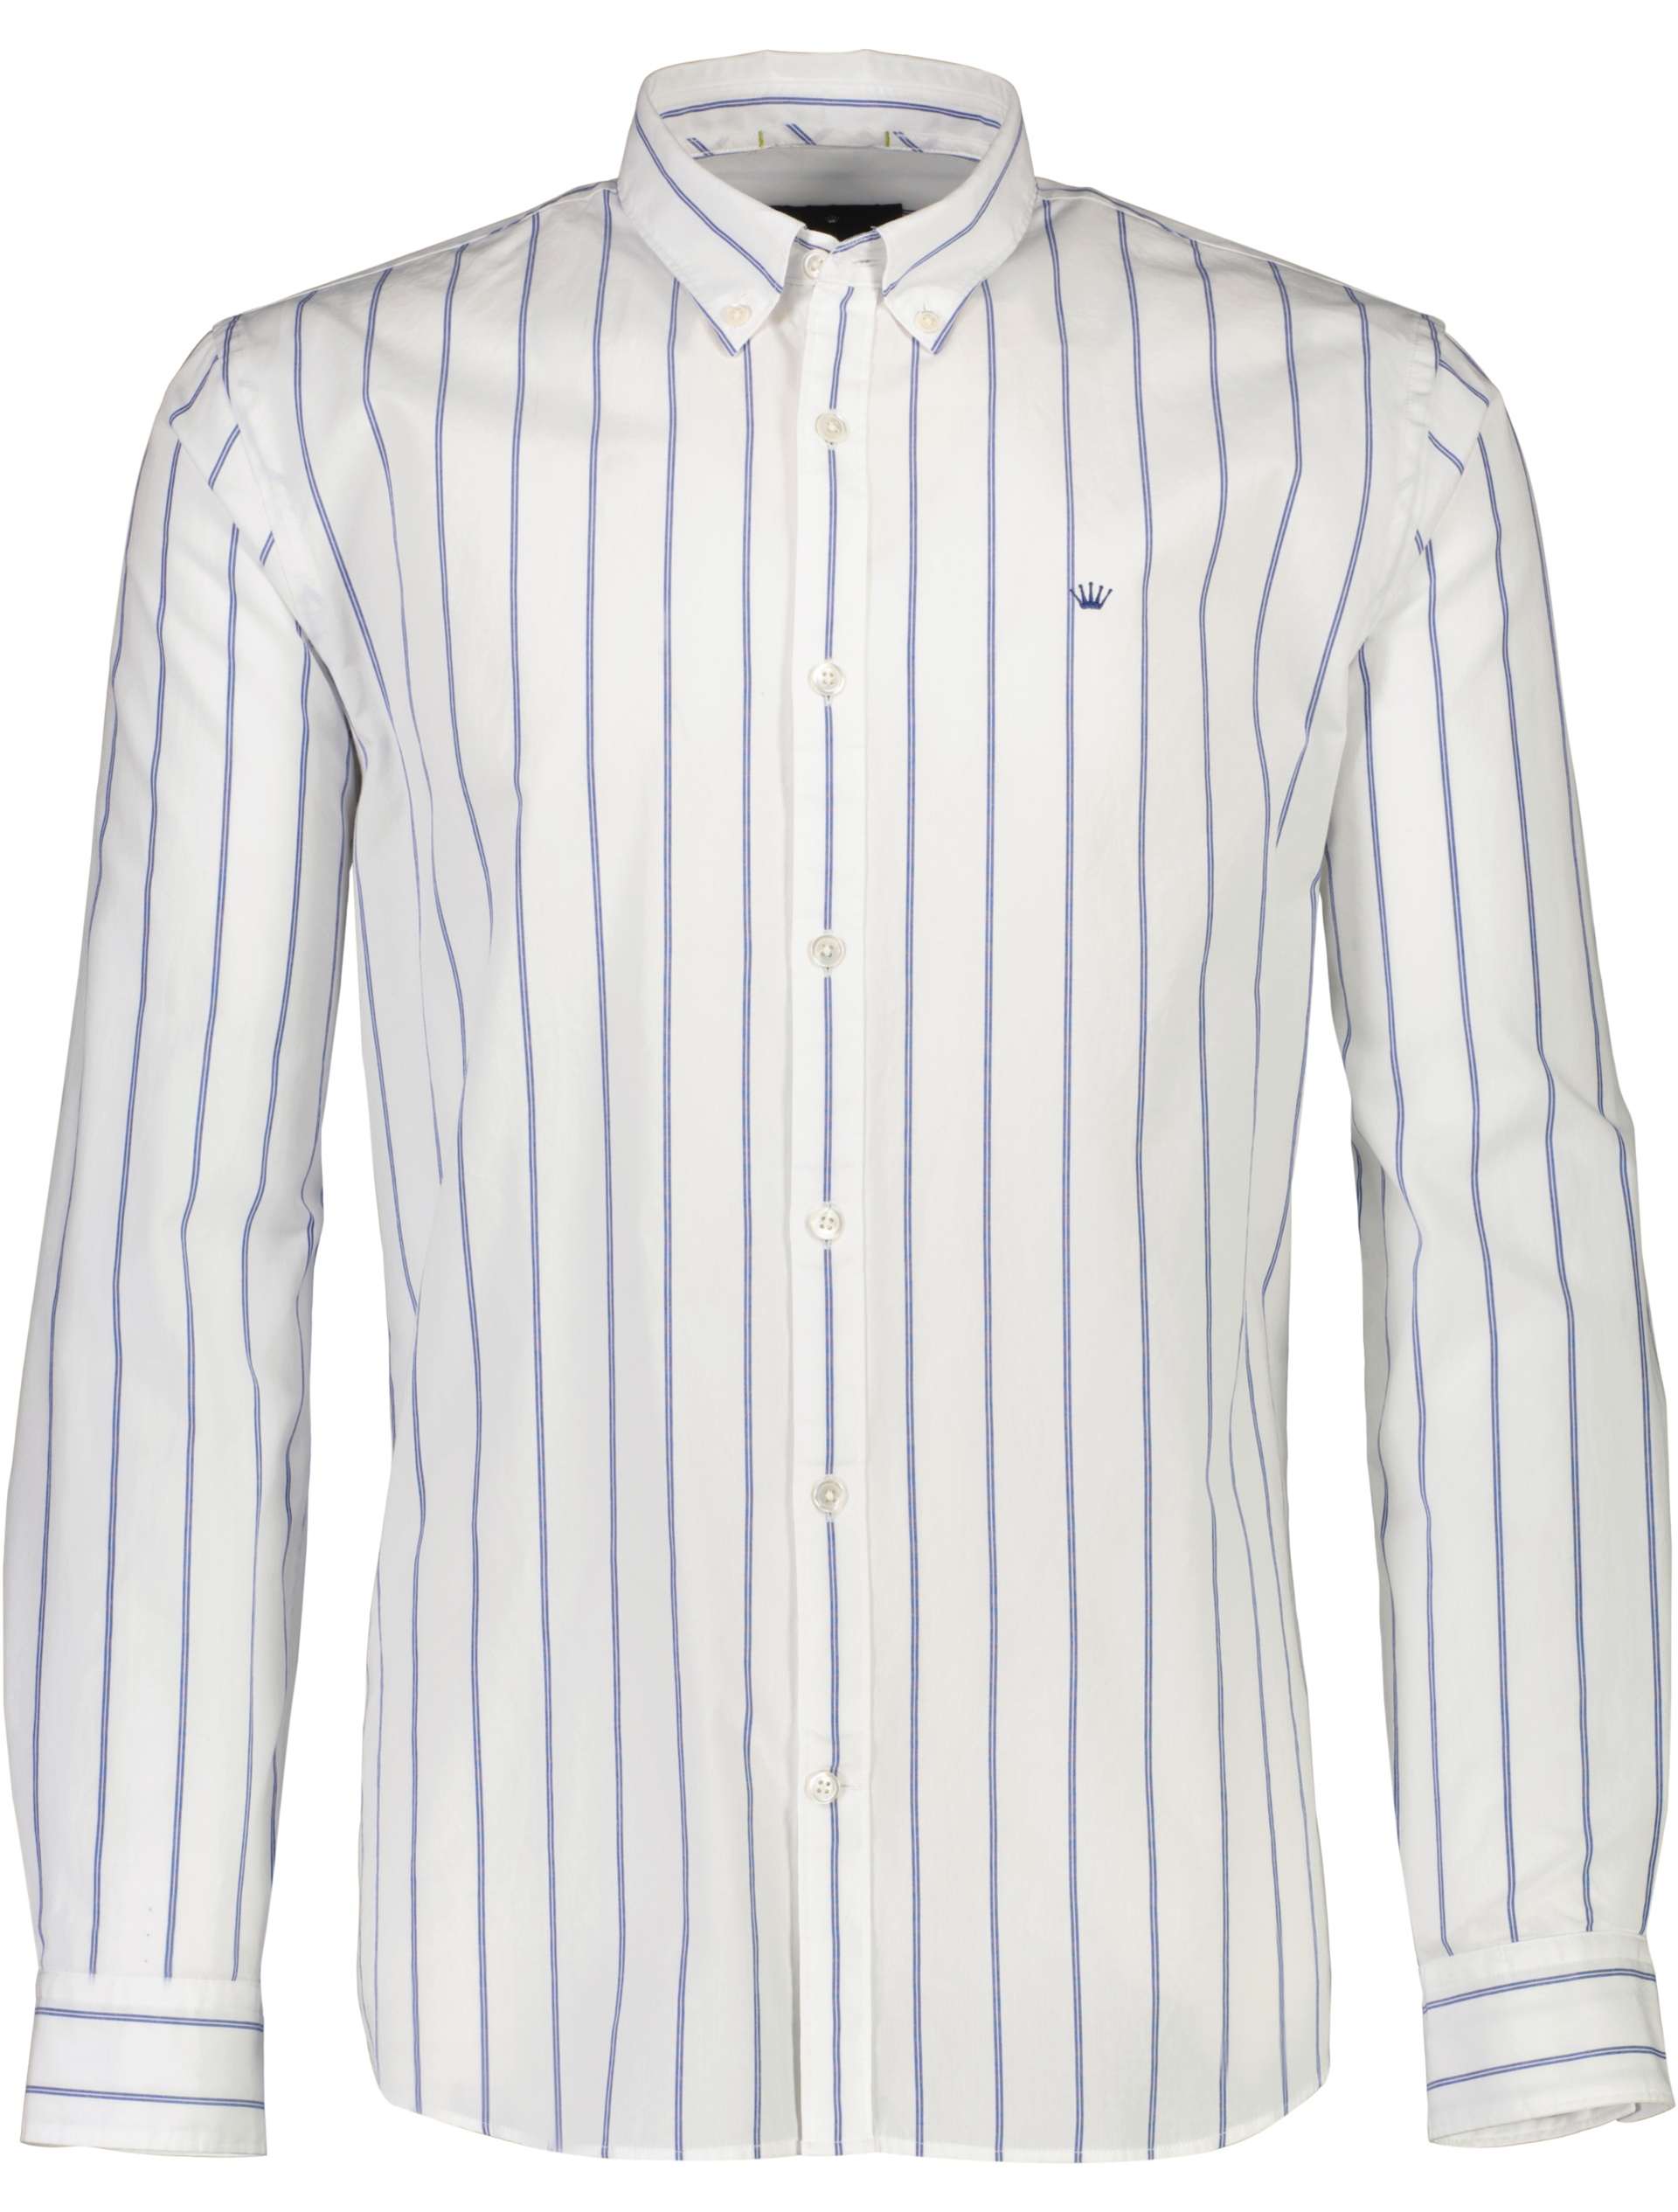 Junk de Luxe Oxford shirt white / white